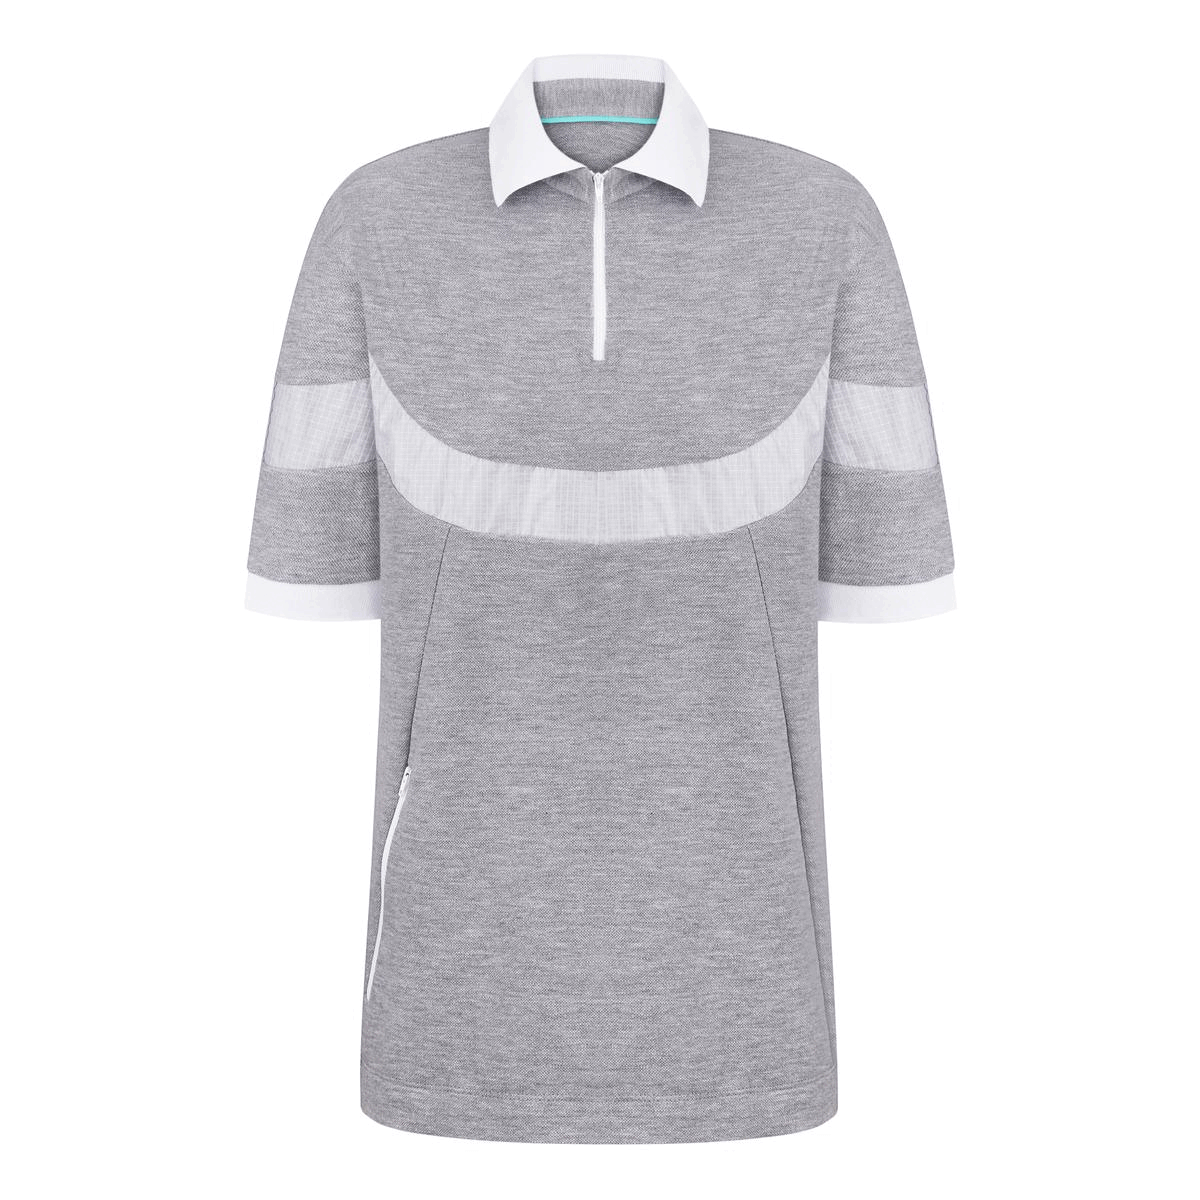 Custom Grey Polo Shirt with short sleeves from REwind. Ukraine